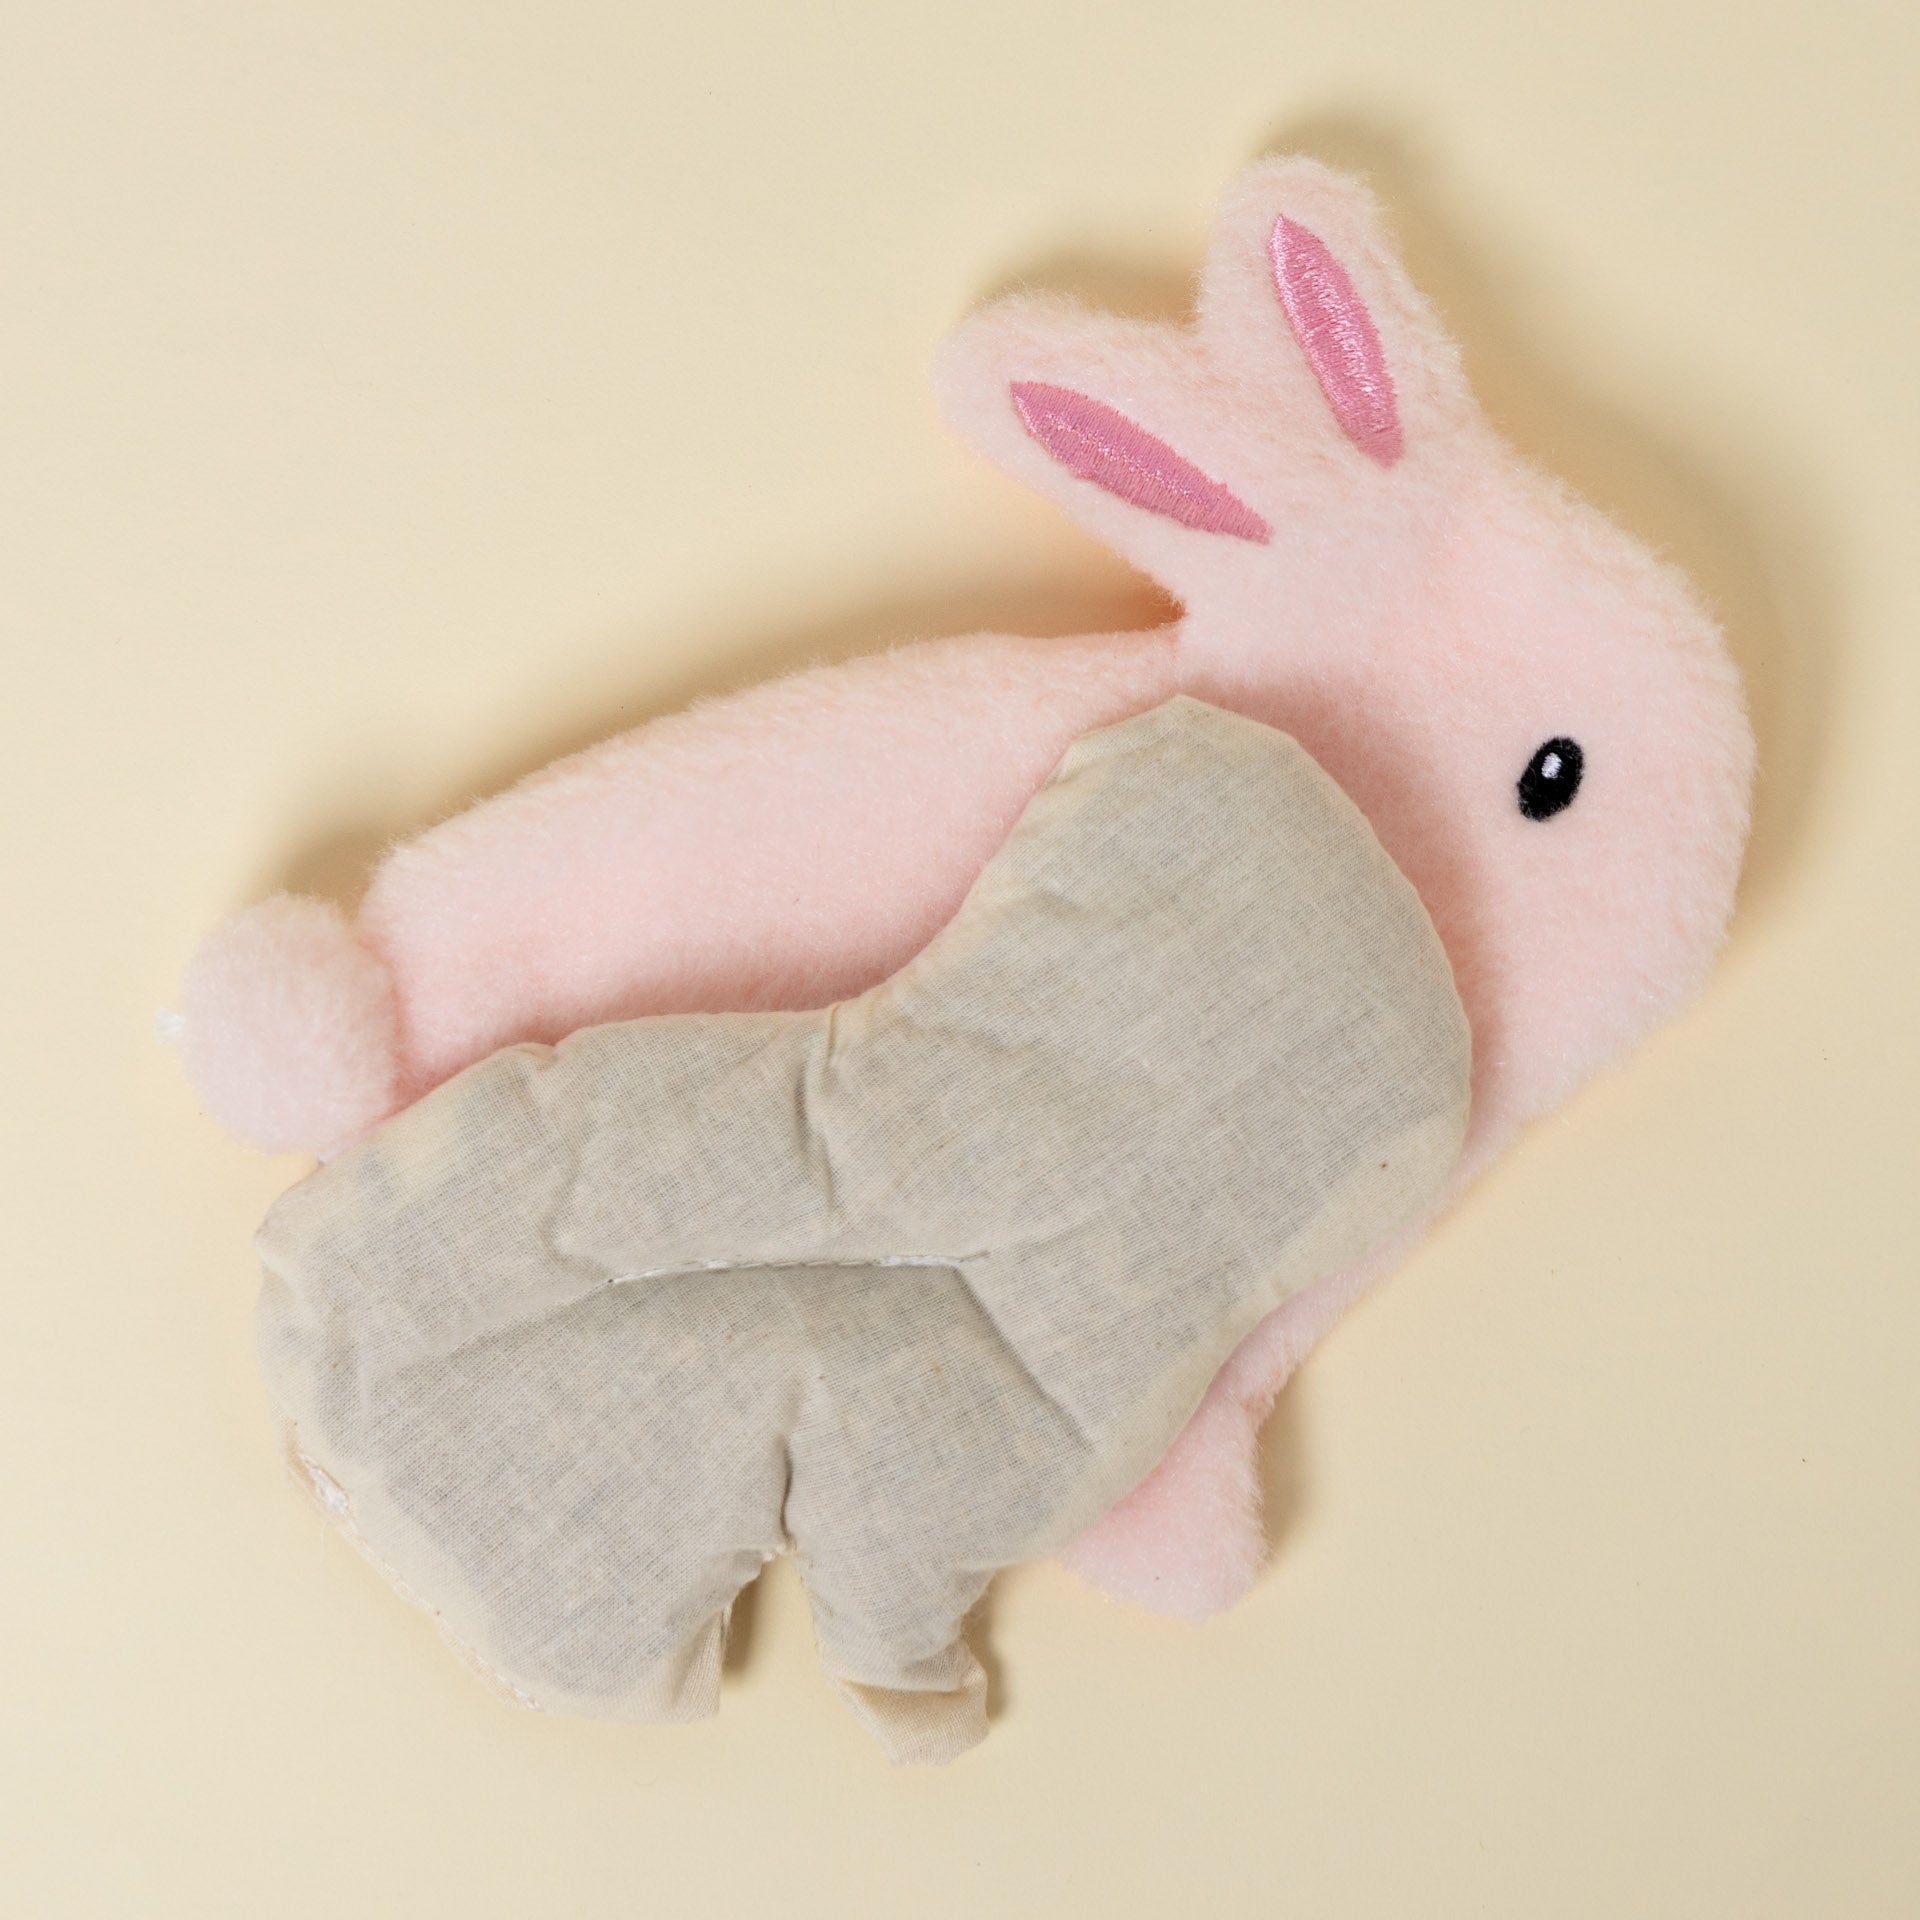 Mini Microwaveable Snuggle Bunny